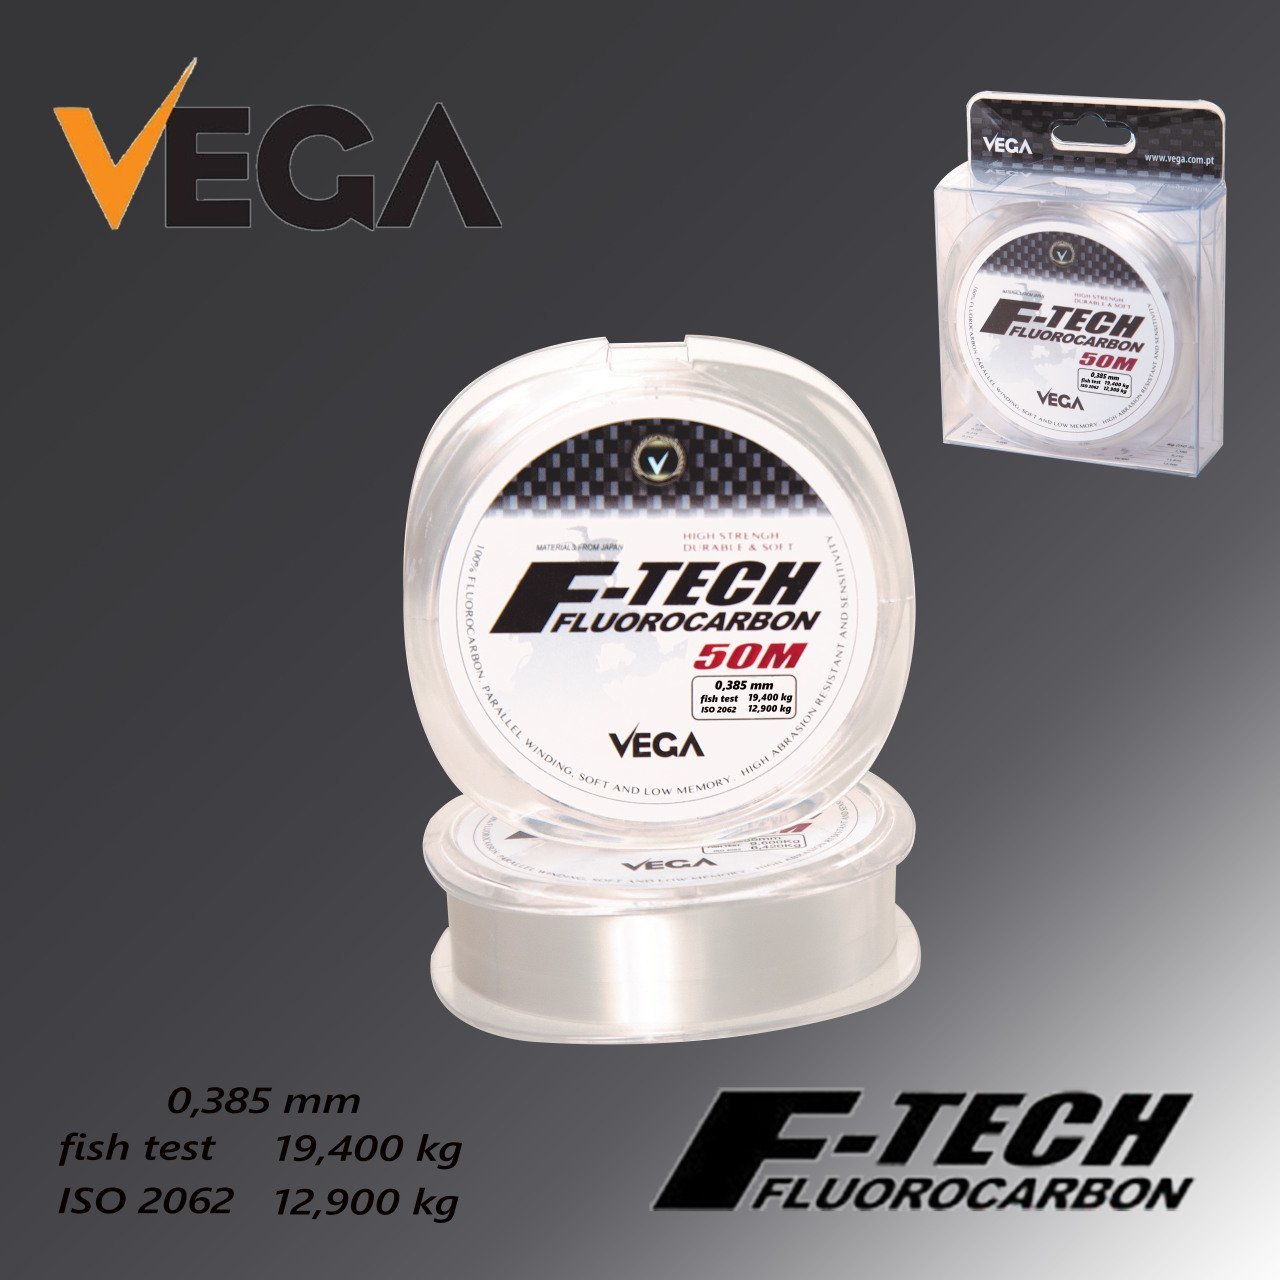 Vega F-Tech Fluorocarbon 50mt 0,385 mm Misina